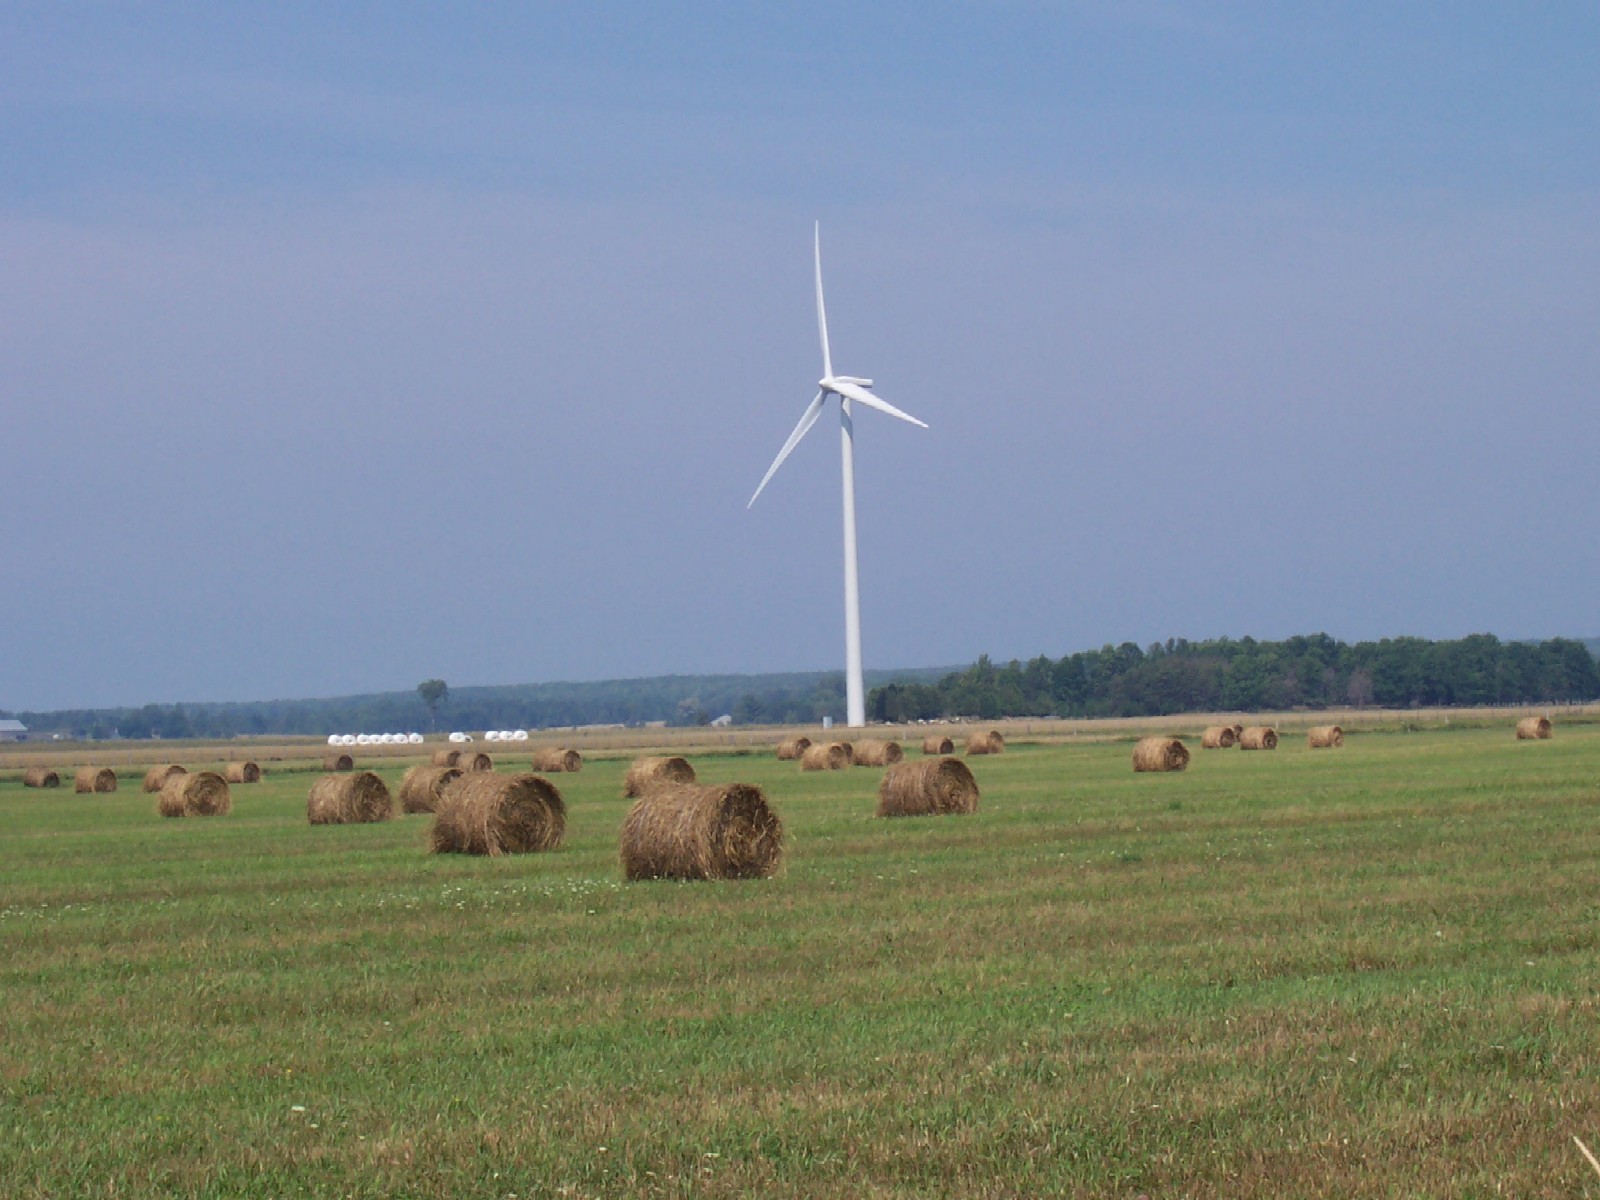 Turbine in a farmers field, Bspo06, Electricity, Farm, Field, HQ Photo